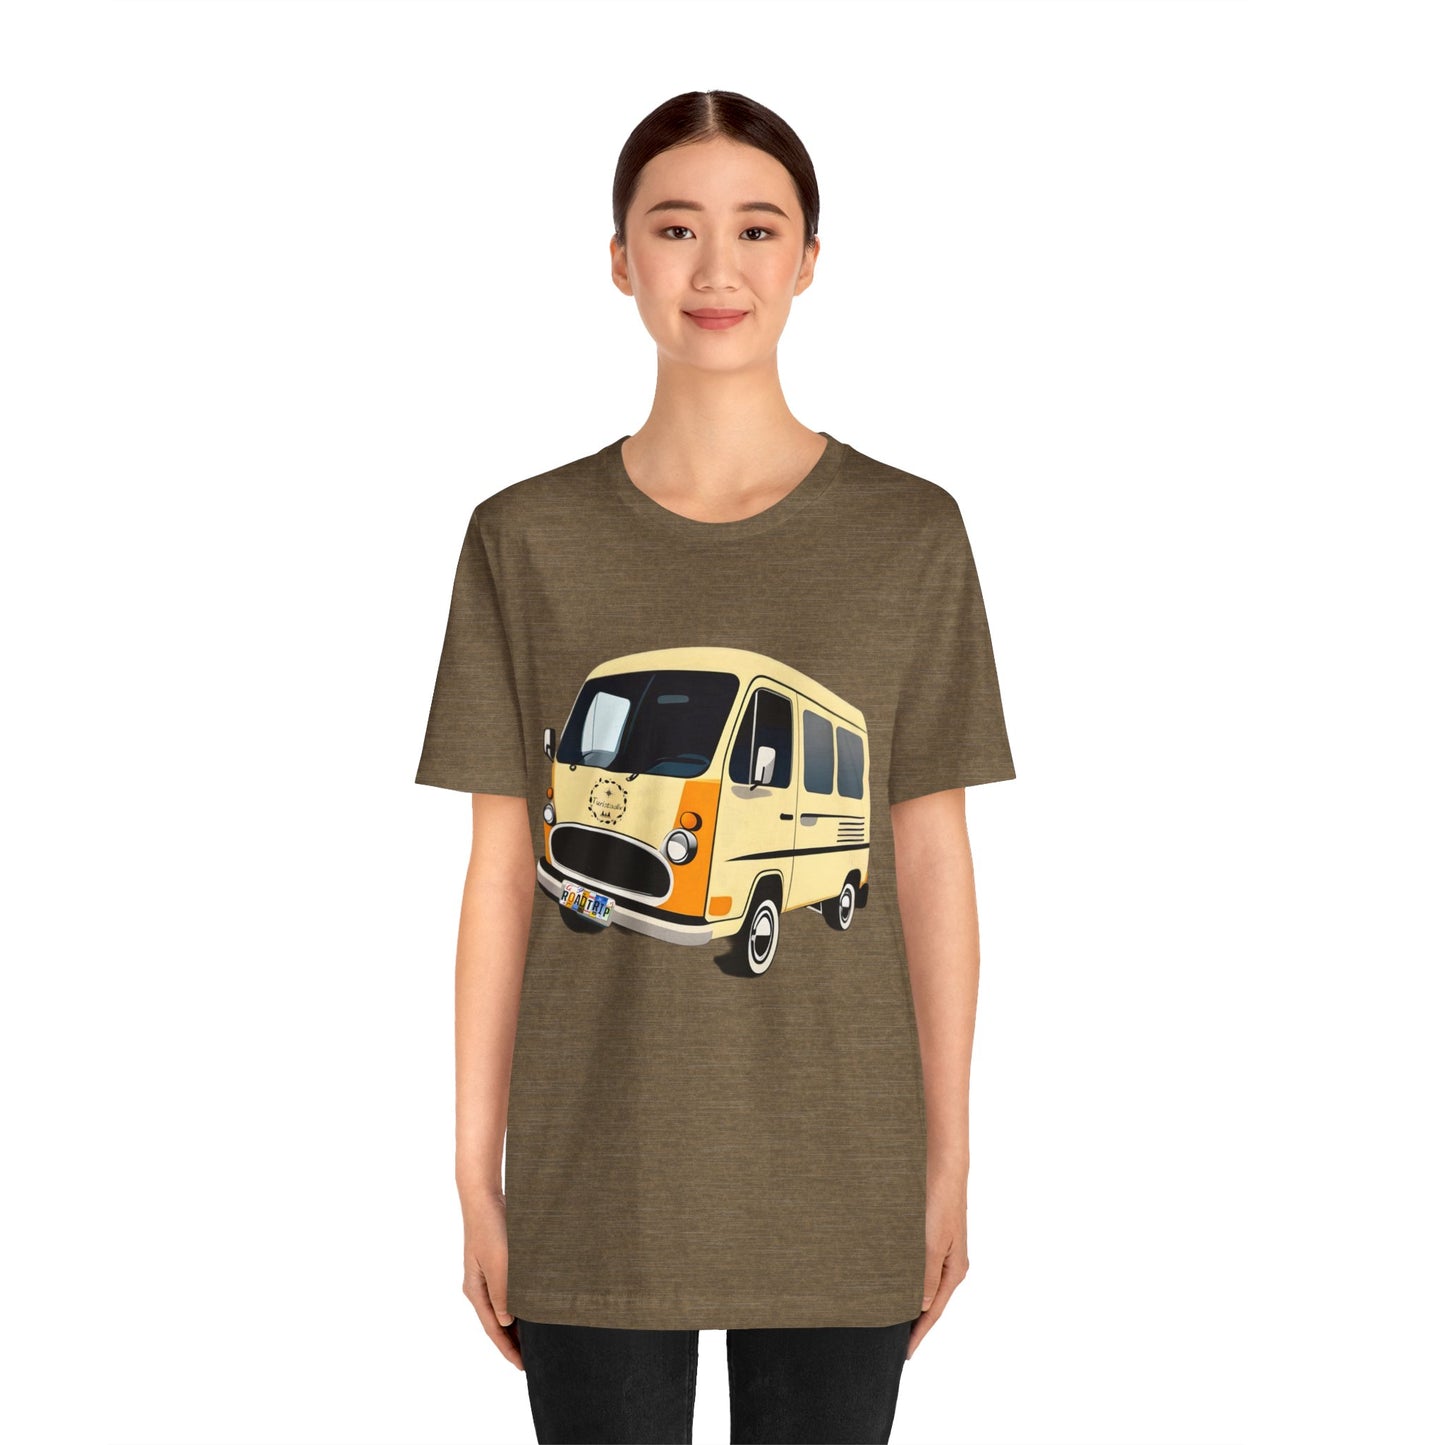 Viajero, Camiseta viaje, trotamundos, camiseta camioneta, camiseta camper, regalo viajero, furgo, furgoneta, nómada , vida camper, camioneta